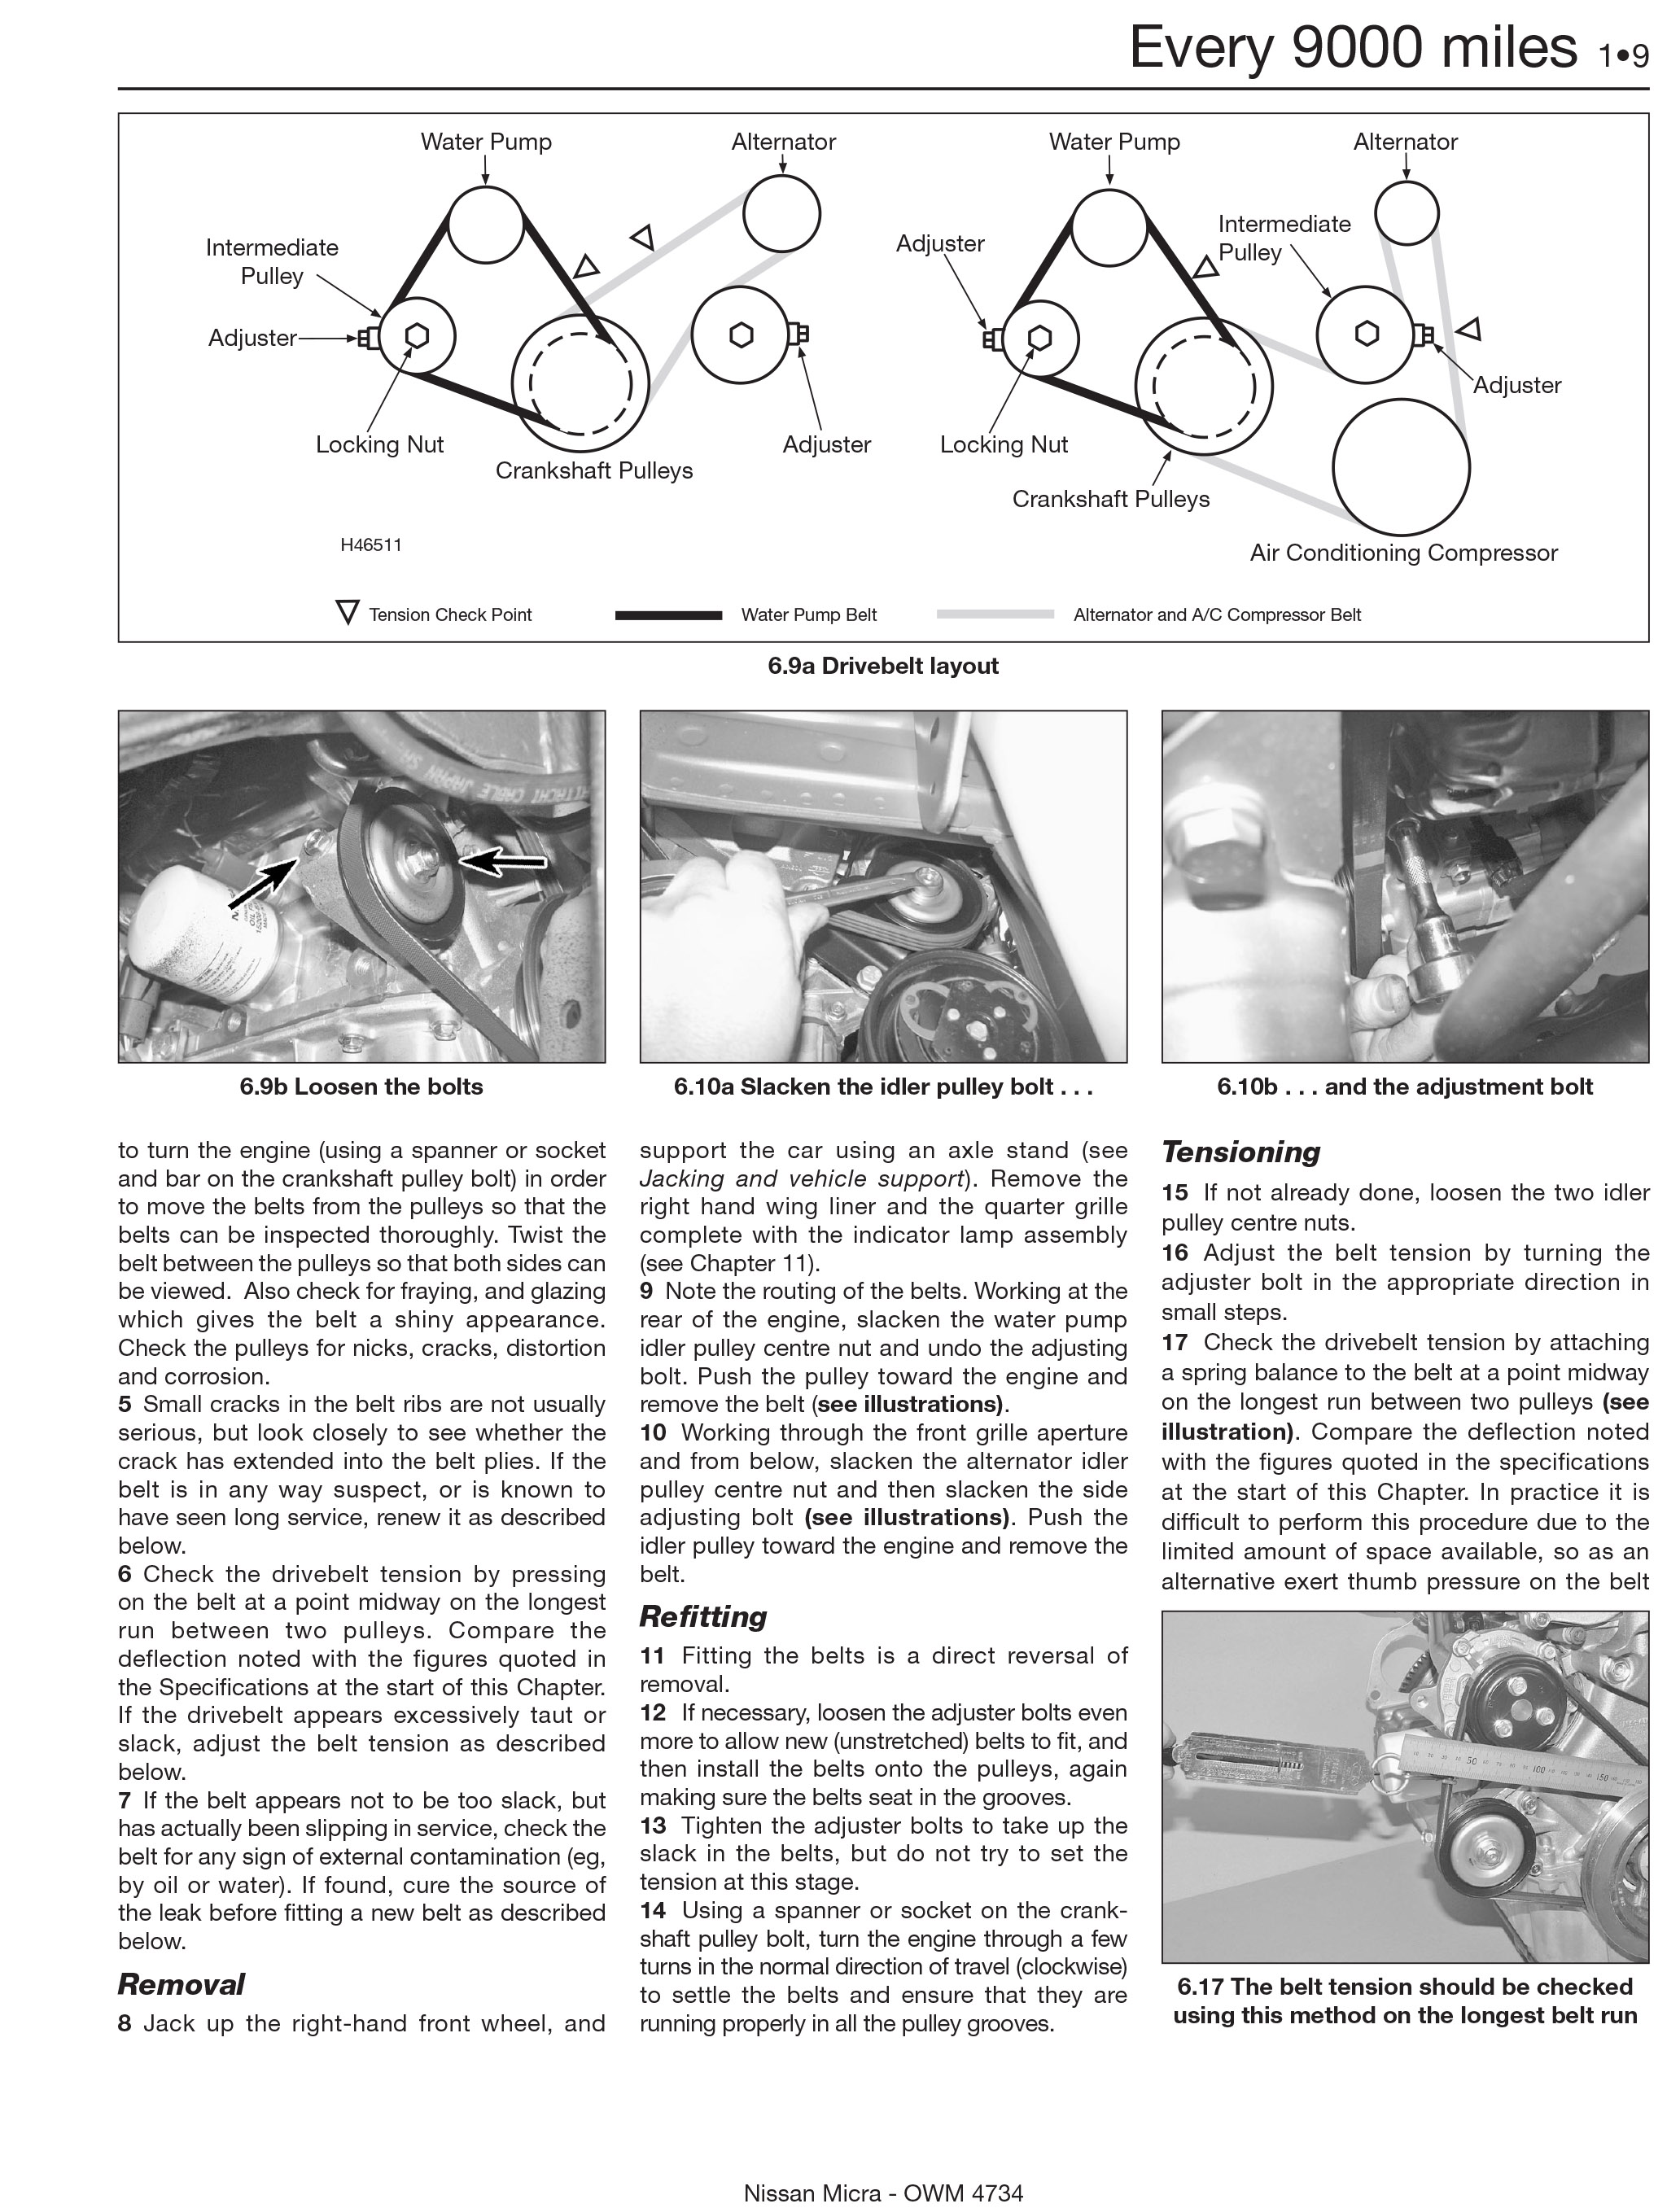 Nissan Micra K12 Manual Free Download headsyellow